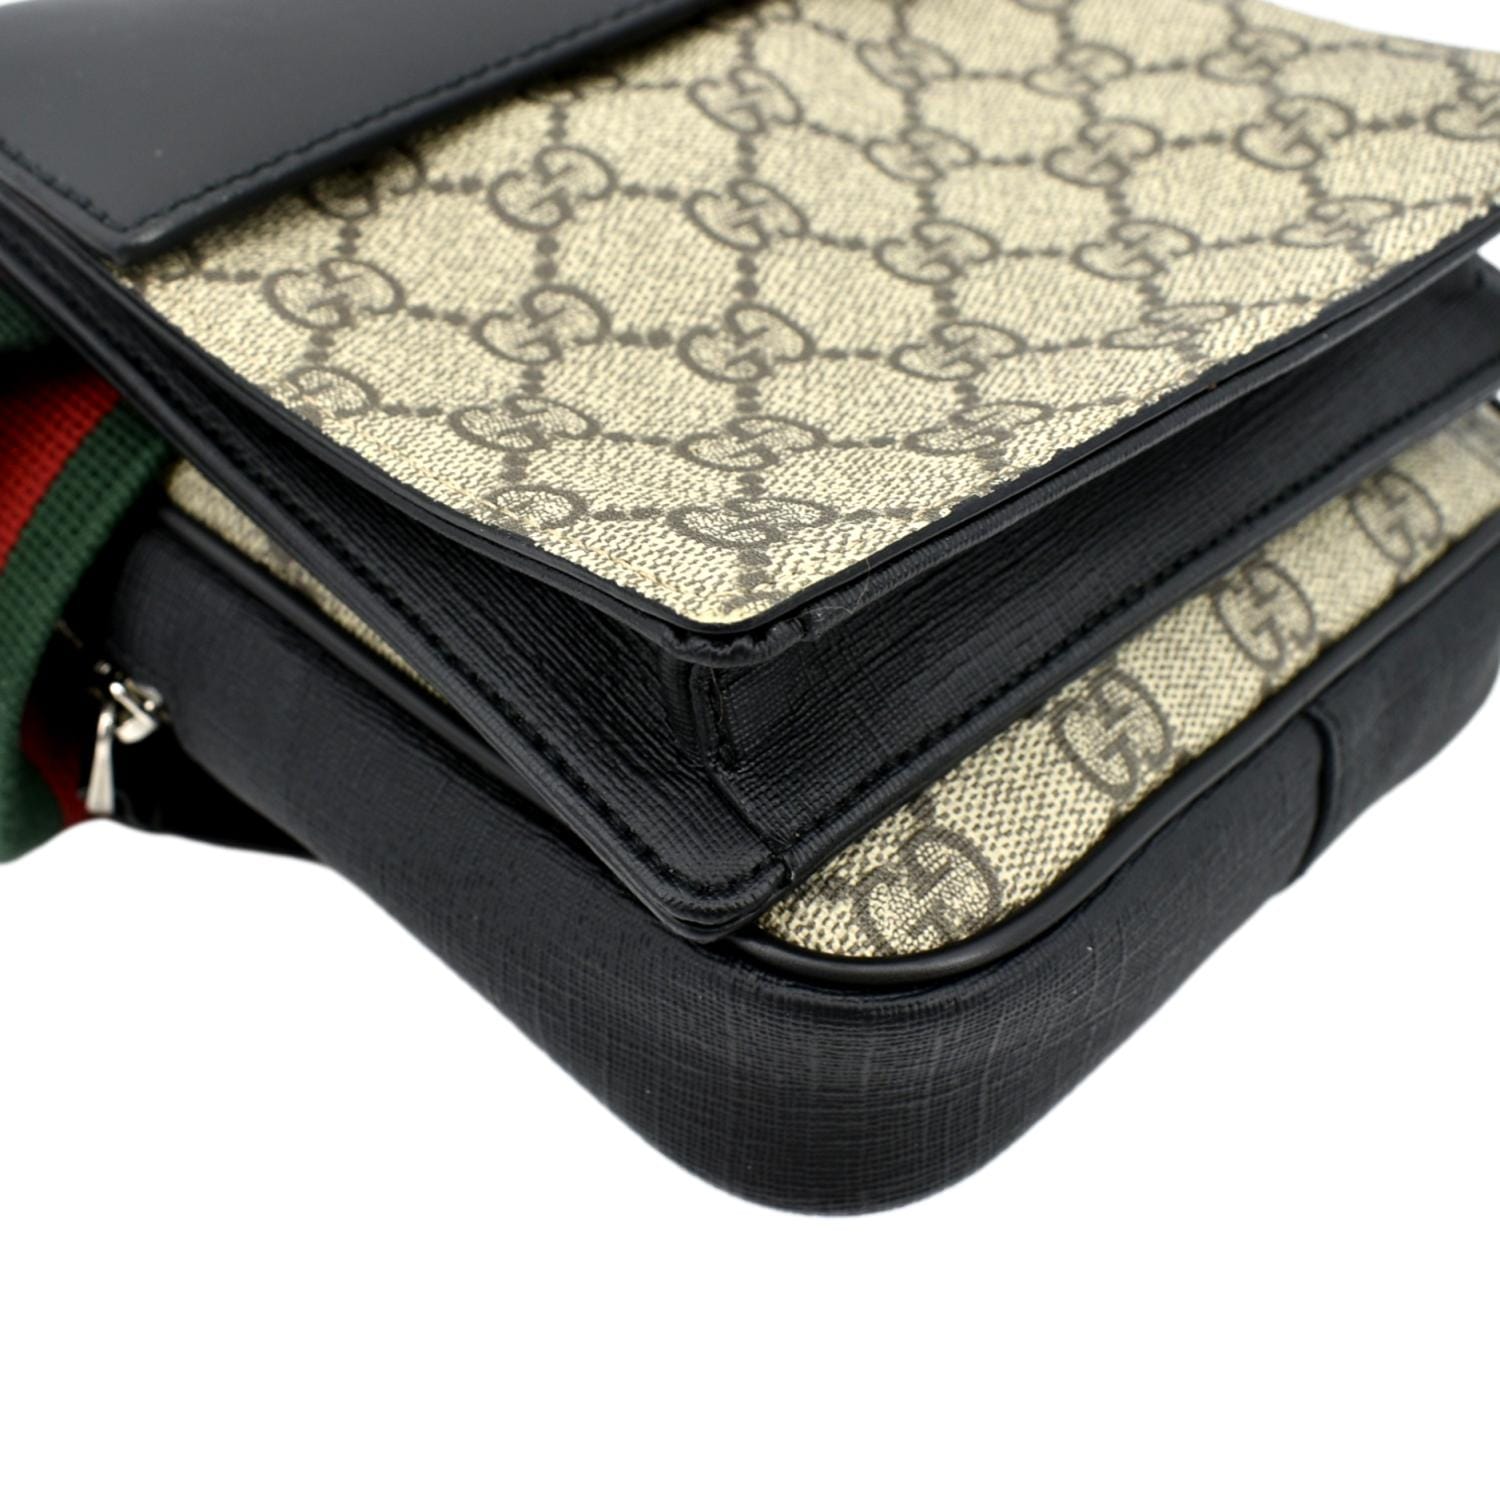 Gucci - Gg-supreme Canvas and Leather Belt Bag - Mens - Beige Multi